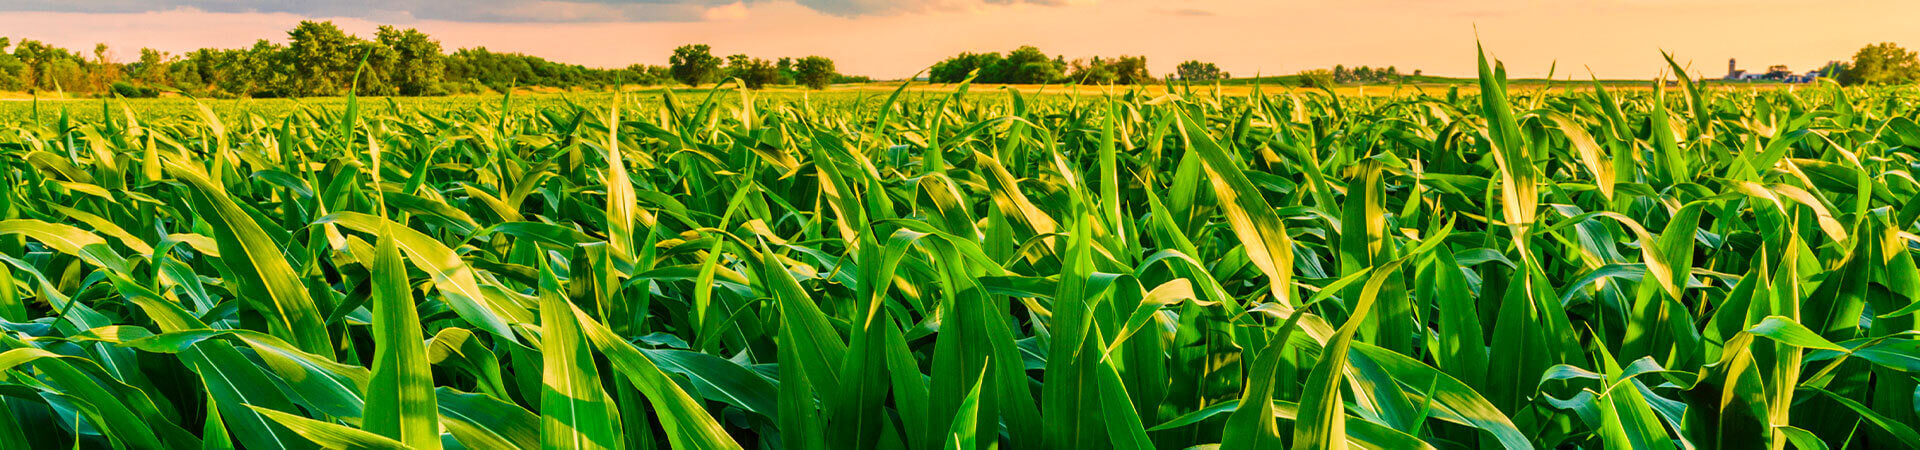 Corn field at Sunset.